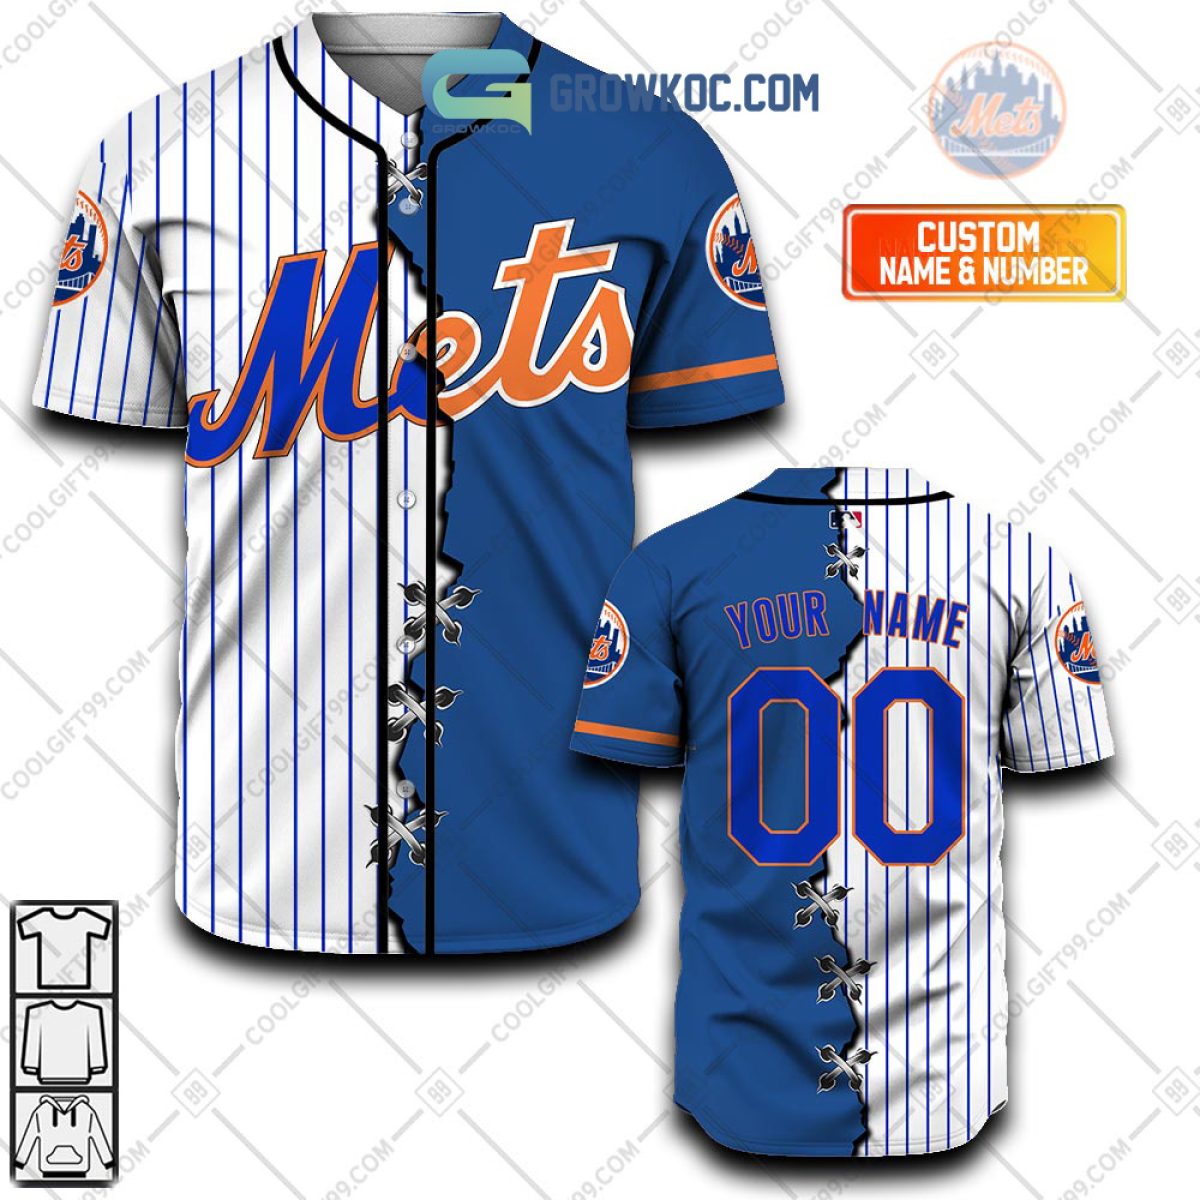 New York Mets MLB Hawaii Shirt Hot Trending Summer - Growkoc